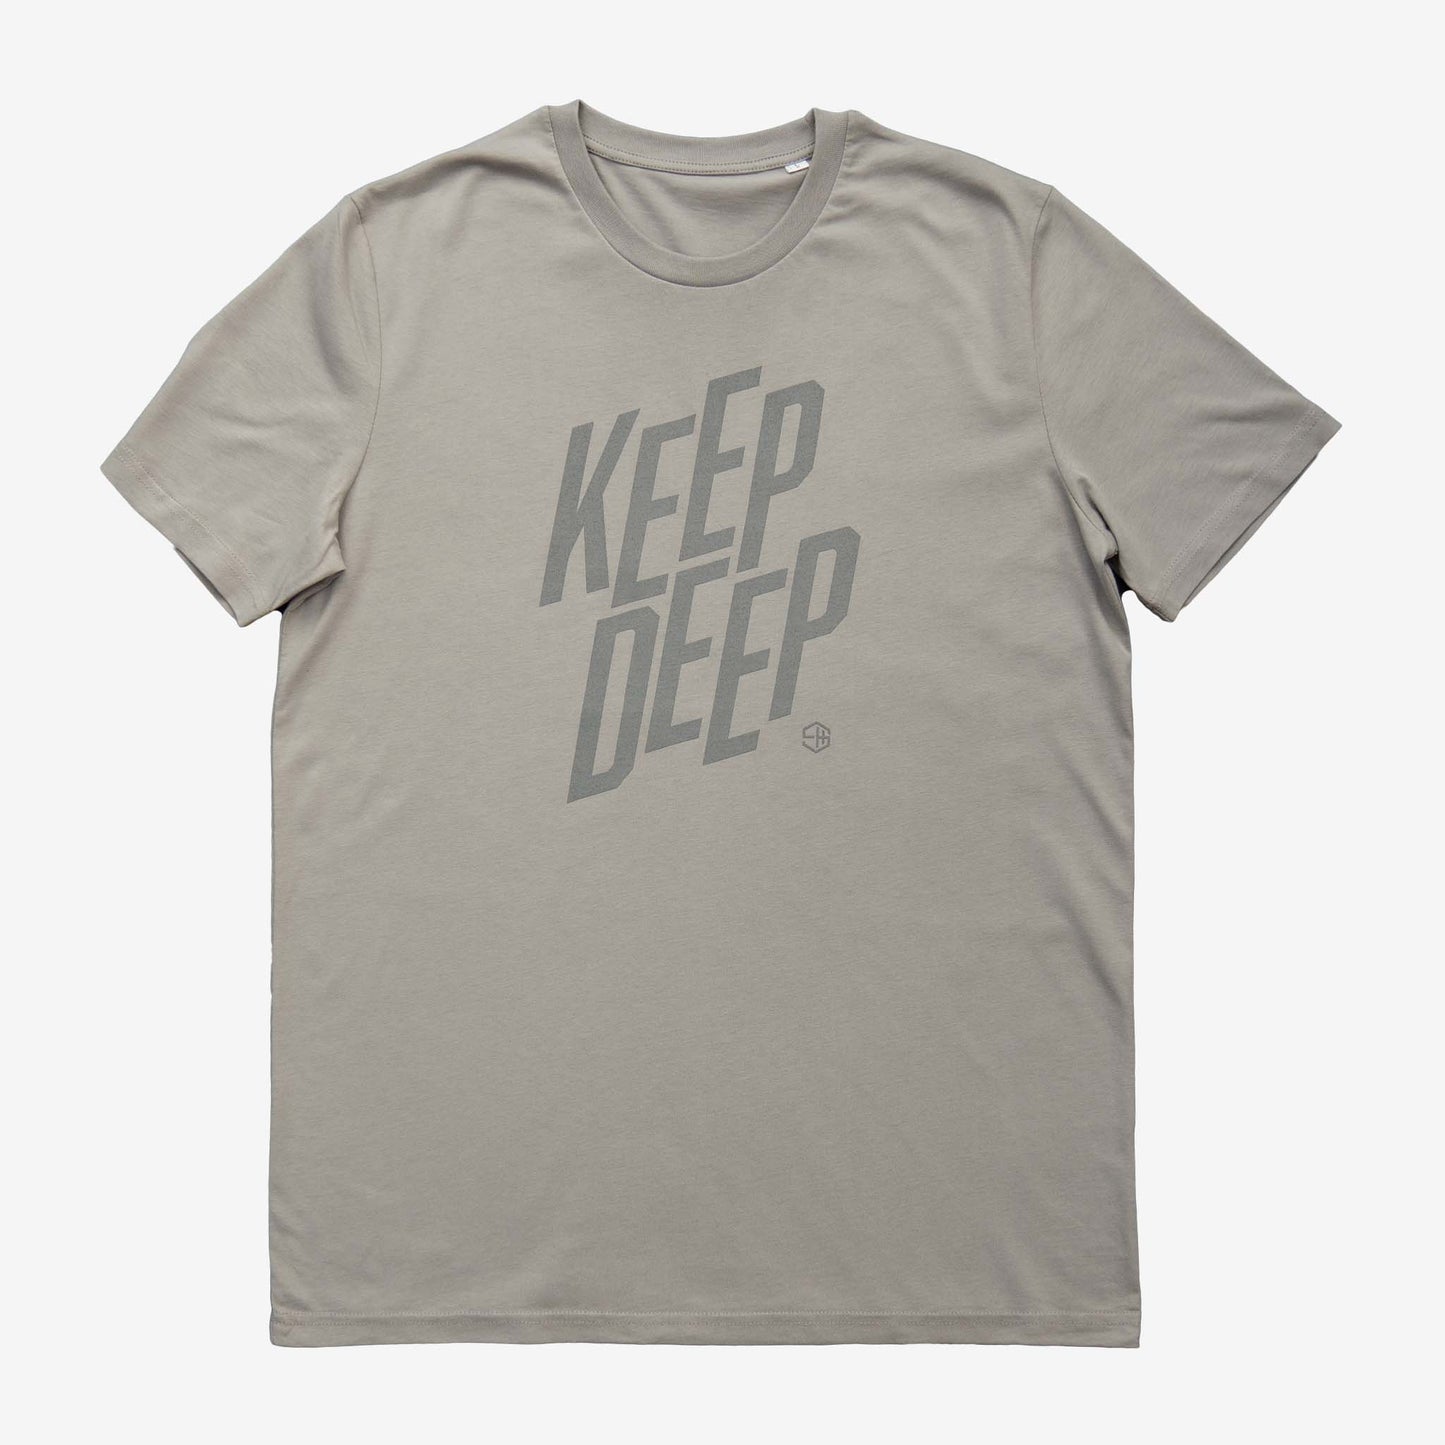 Keep Deep House Music Tshirt Grey